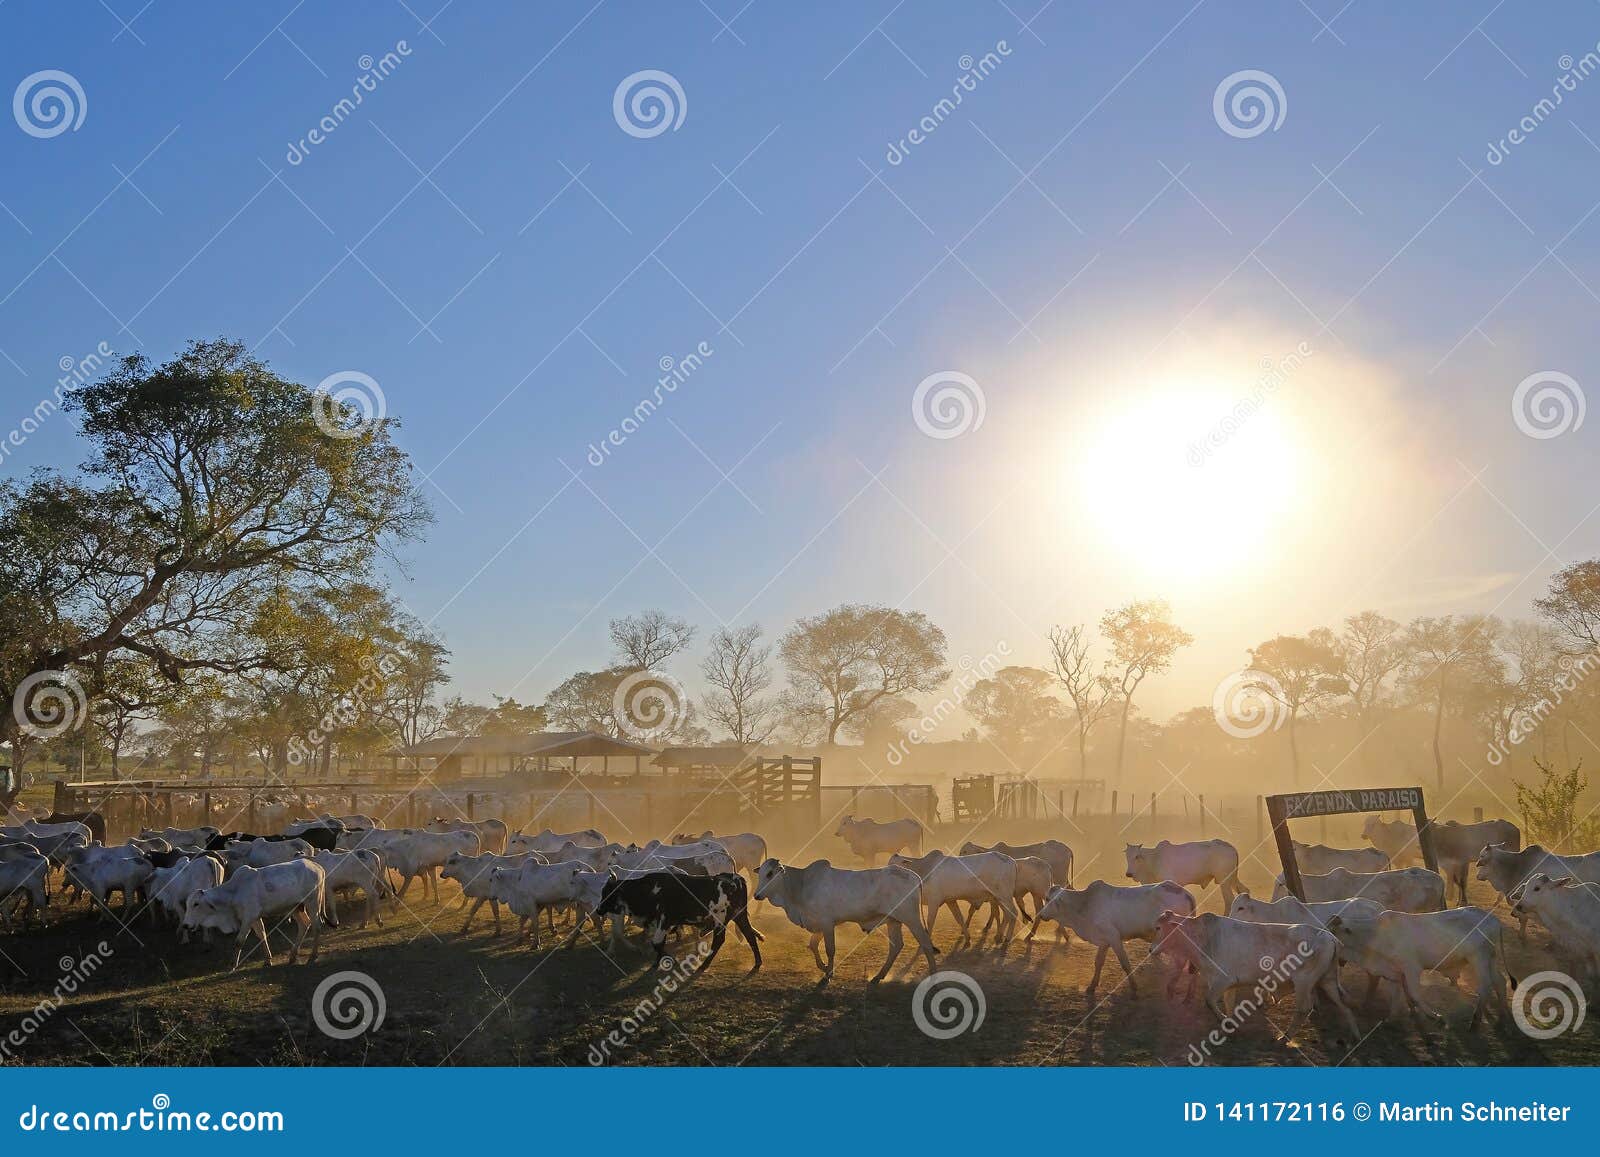 cows on farm with sign fazenda paraiso - paradise farm portuguese text, transpantaneira road, pantanal, pocone, brazil